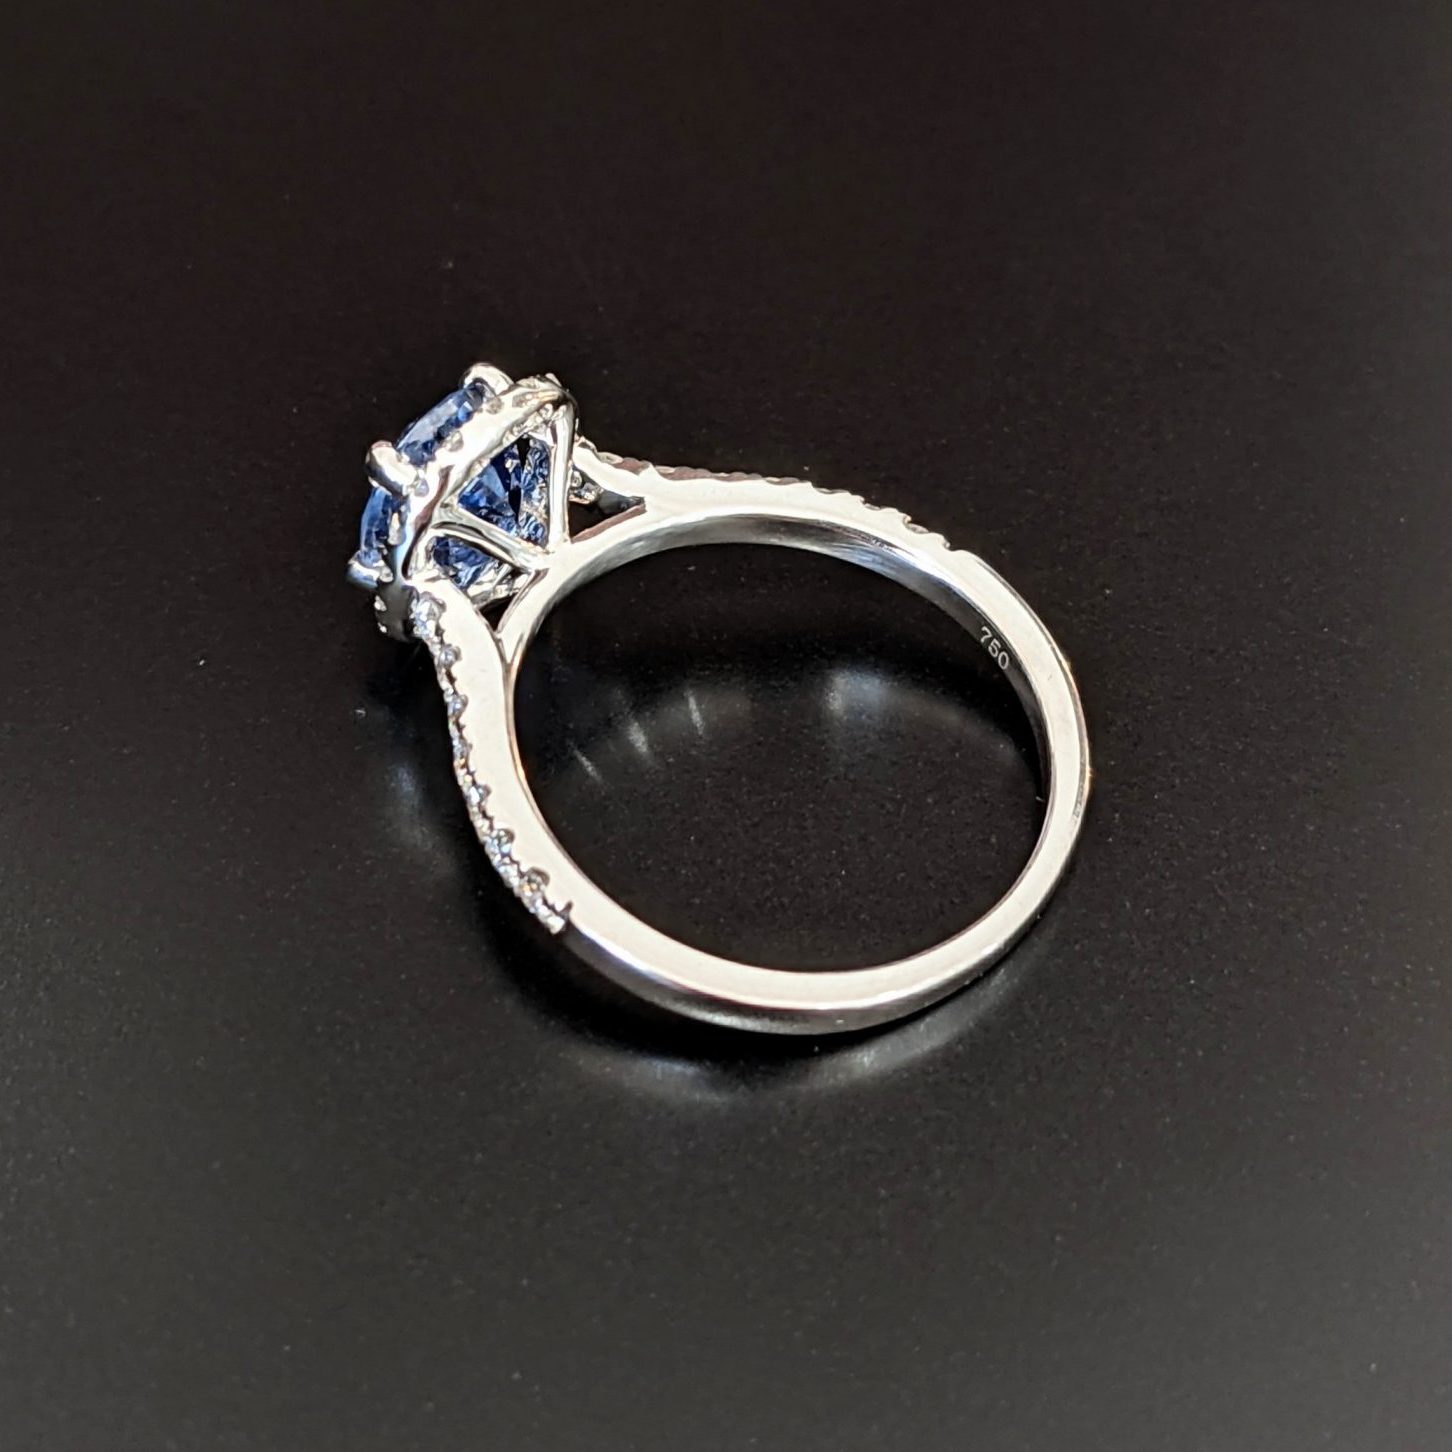 Mid Blue Ceylon Sapphire and Diamond Ring - Danny Lee Designs